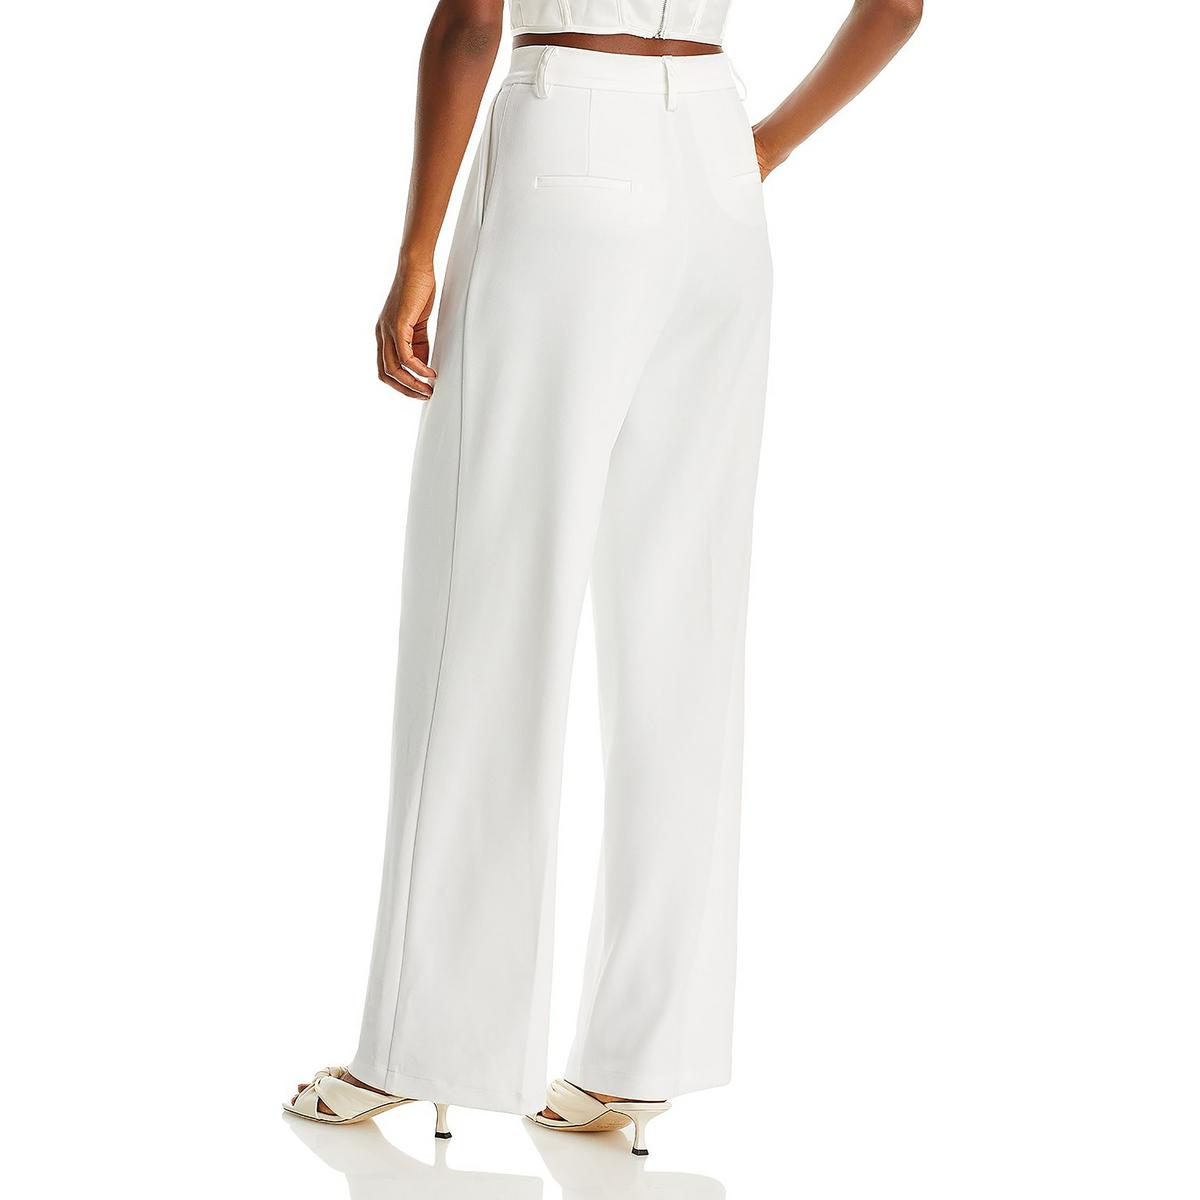 Aqua Womens White Knit Satin Trim Pleated Dress Pants Trousers L BHFO 0763